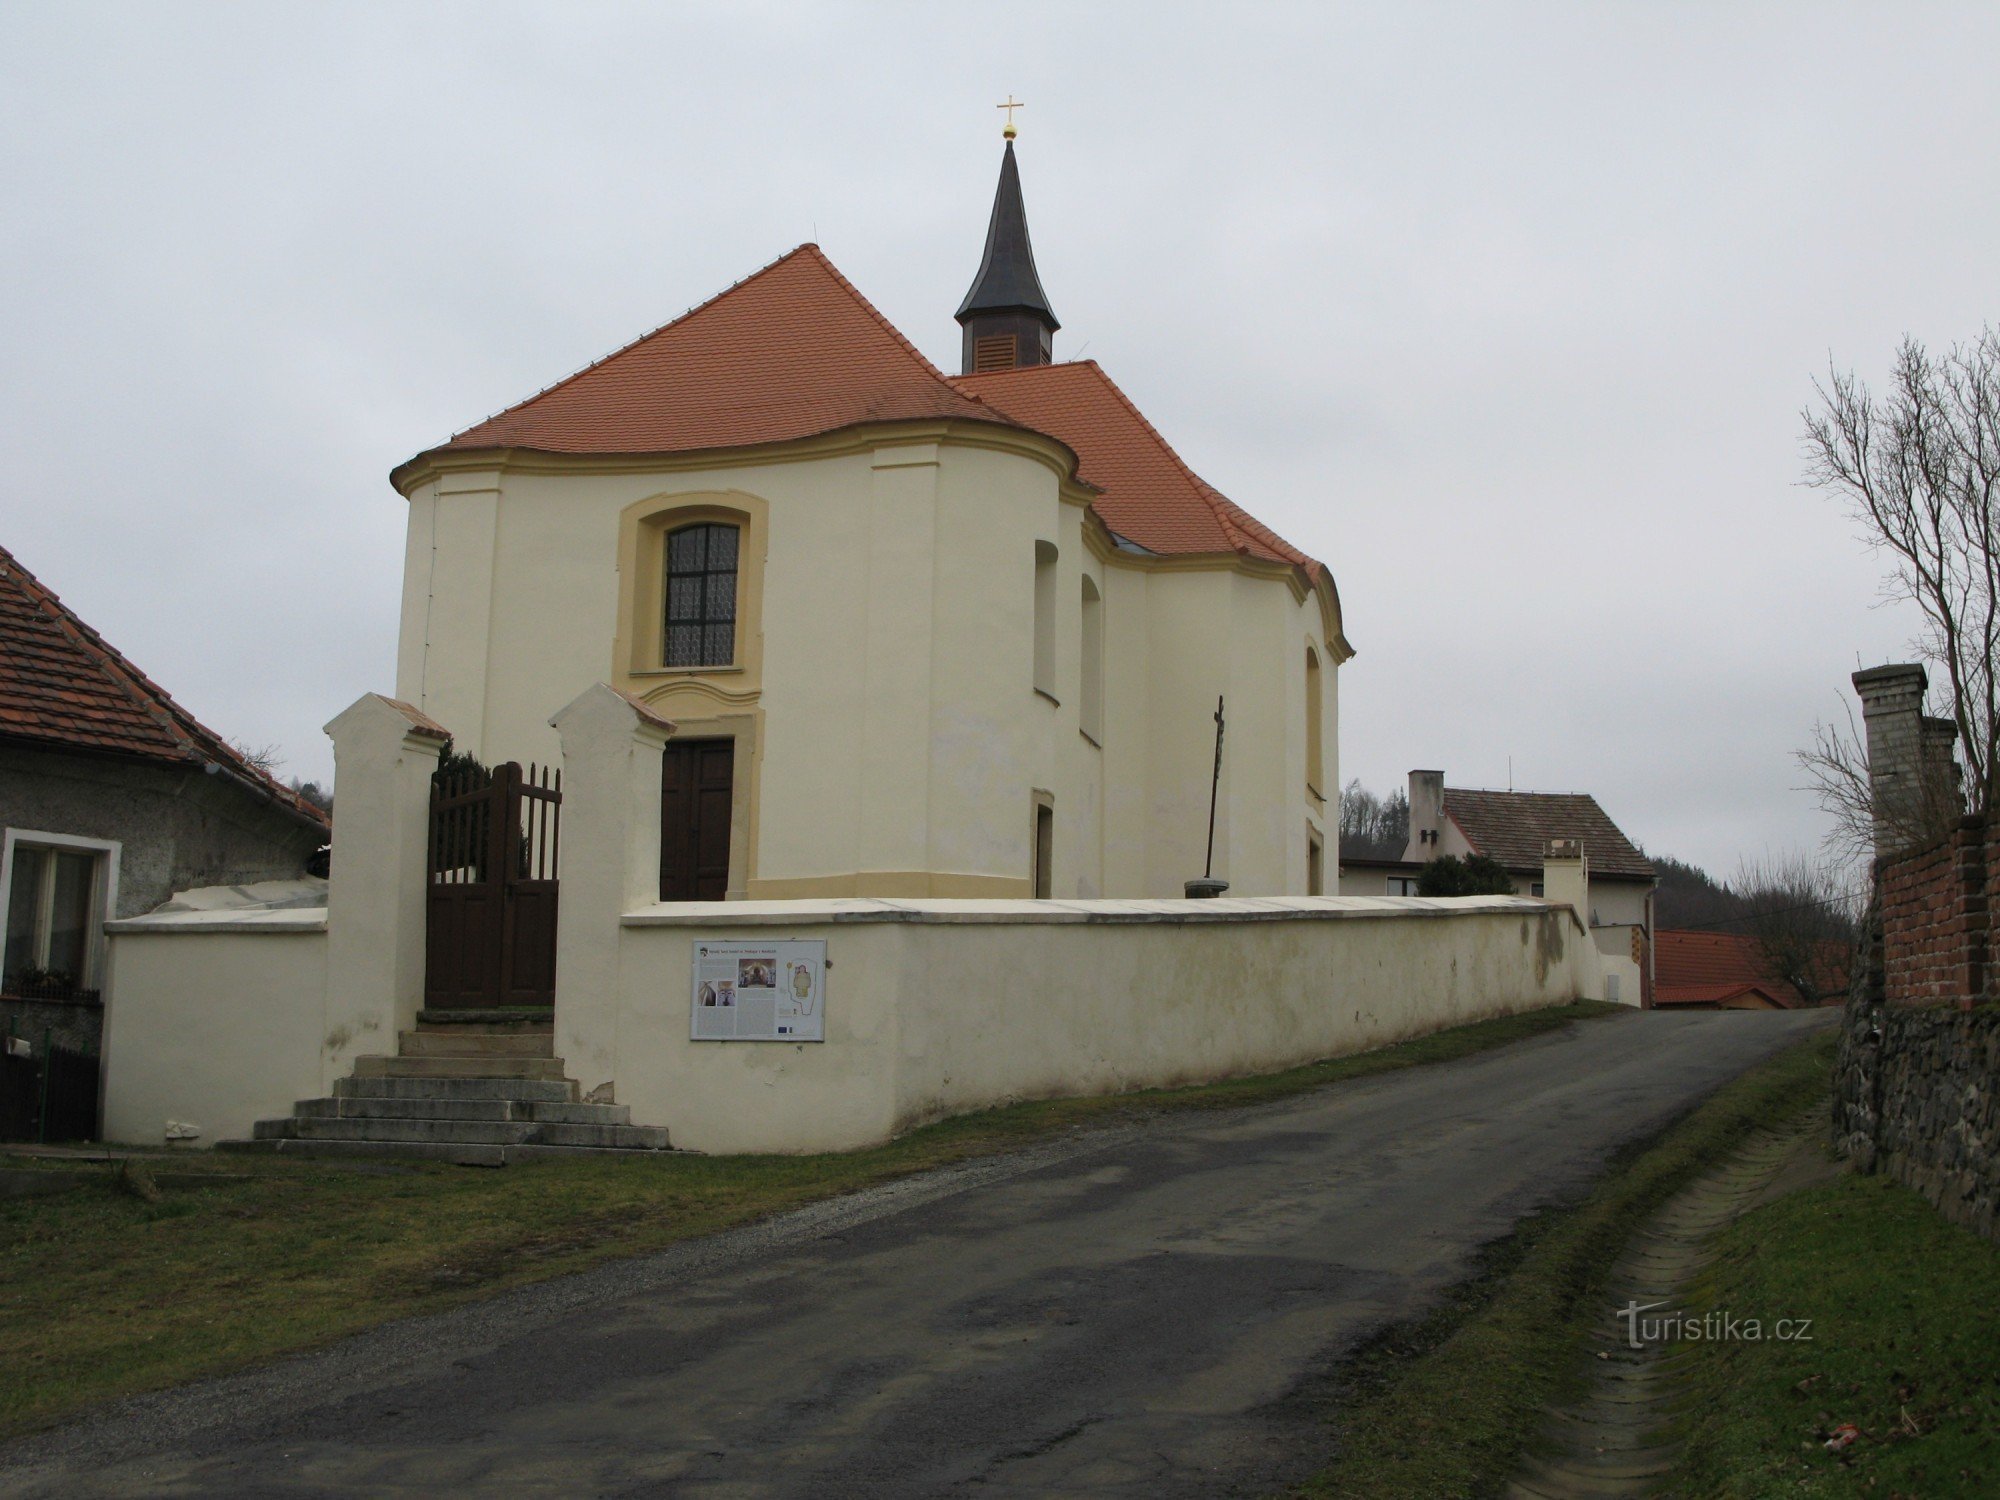 Nezdice - Church of St. gräva upp